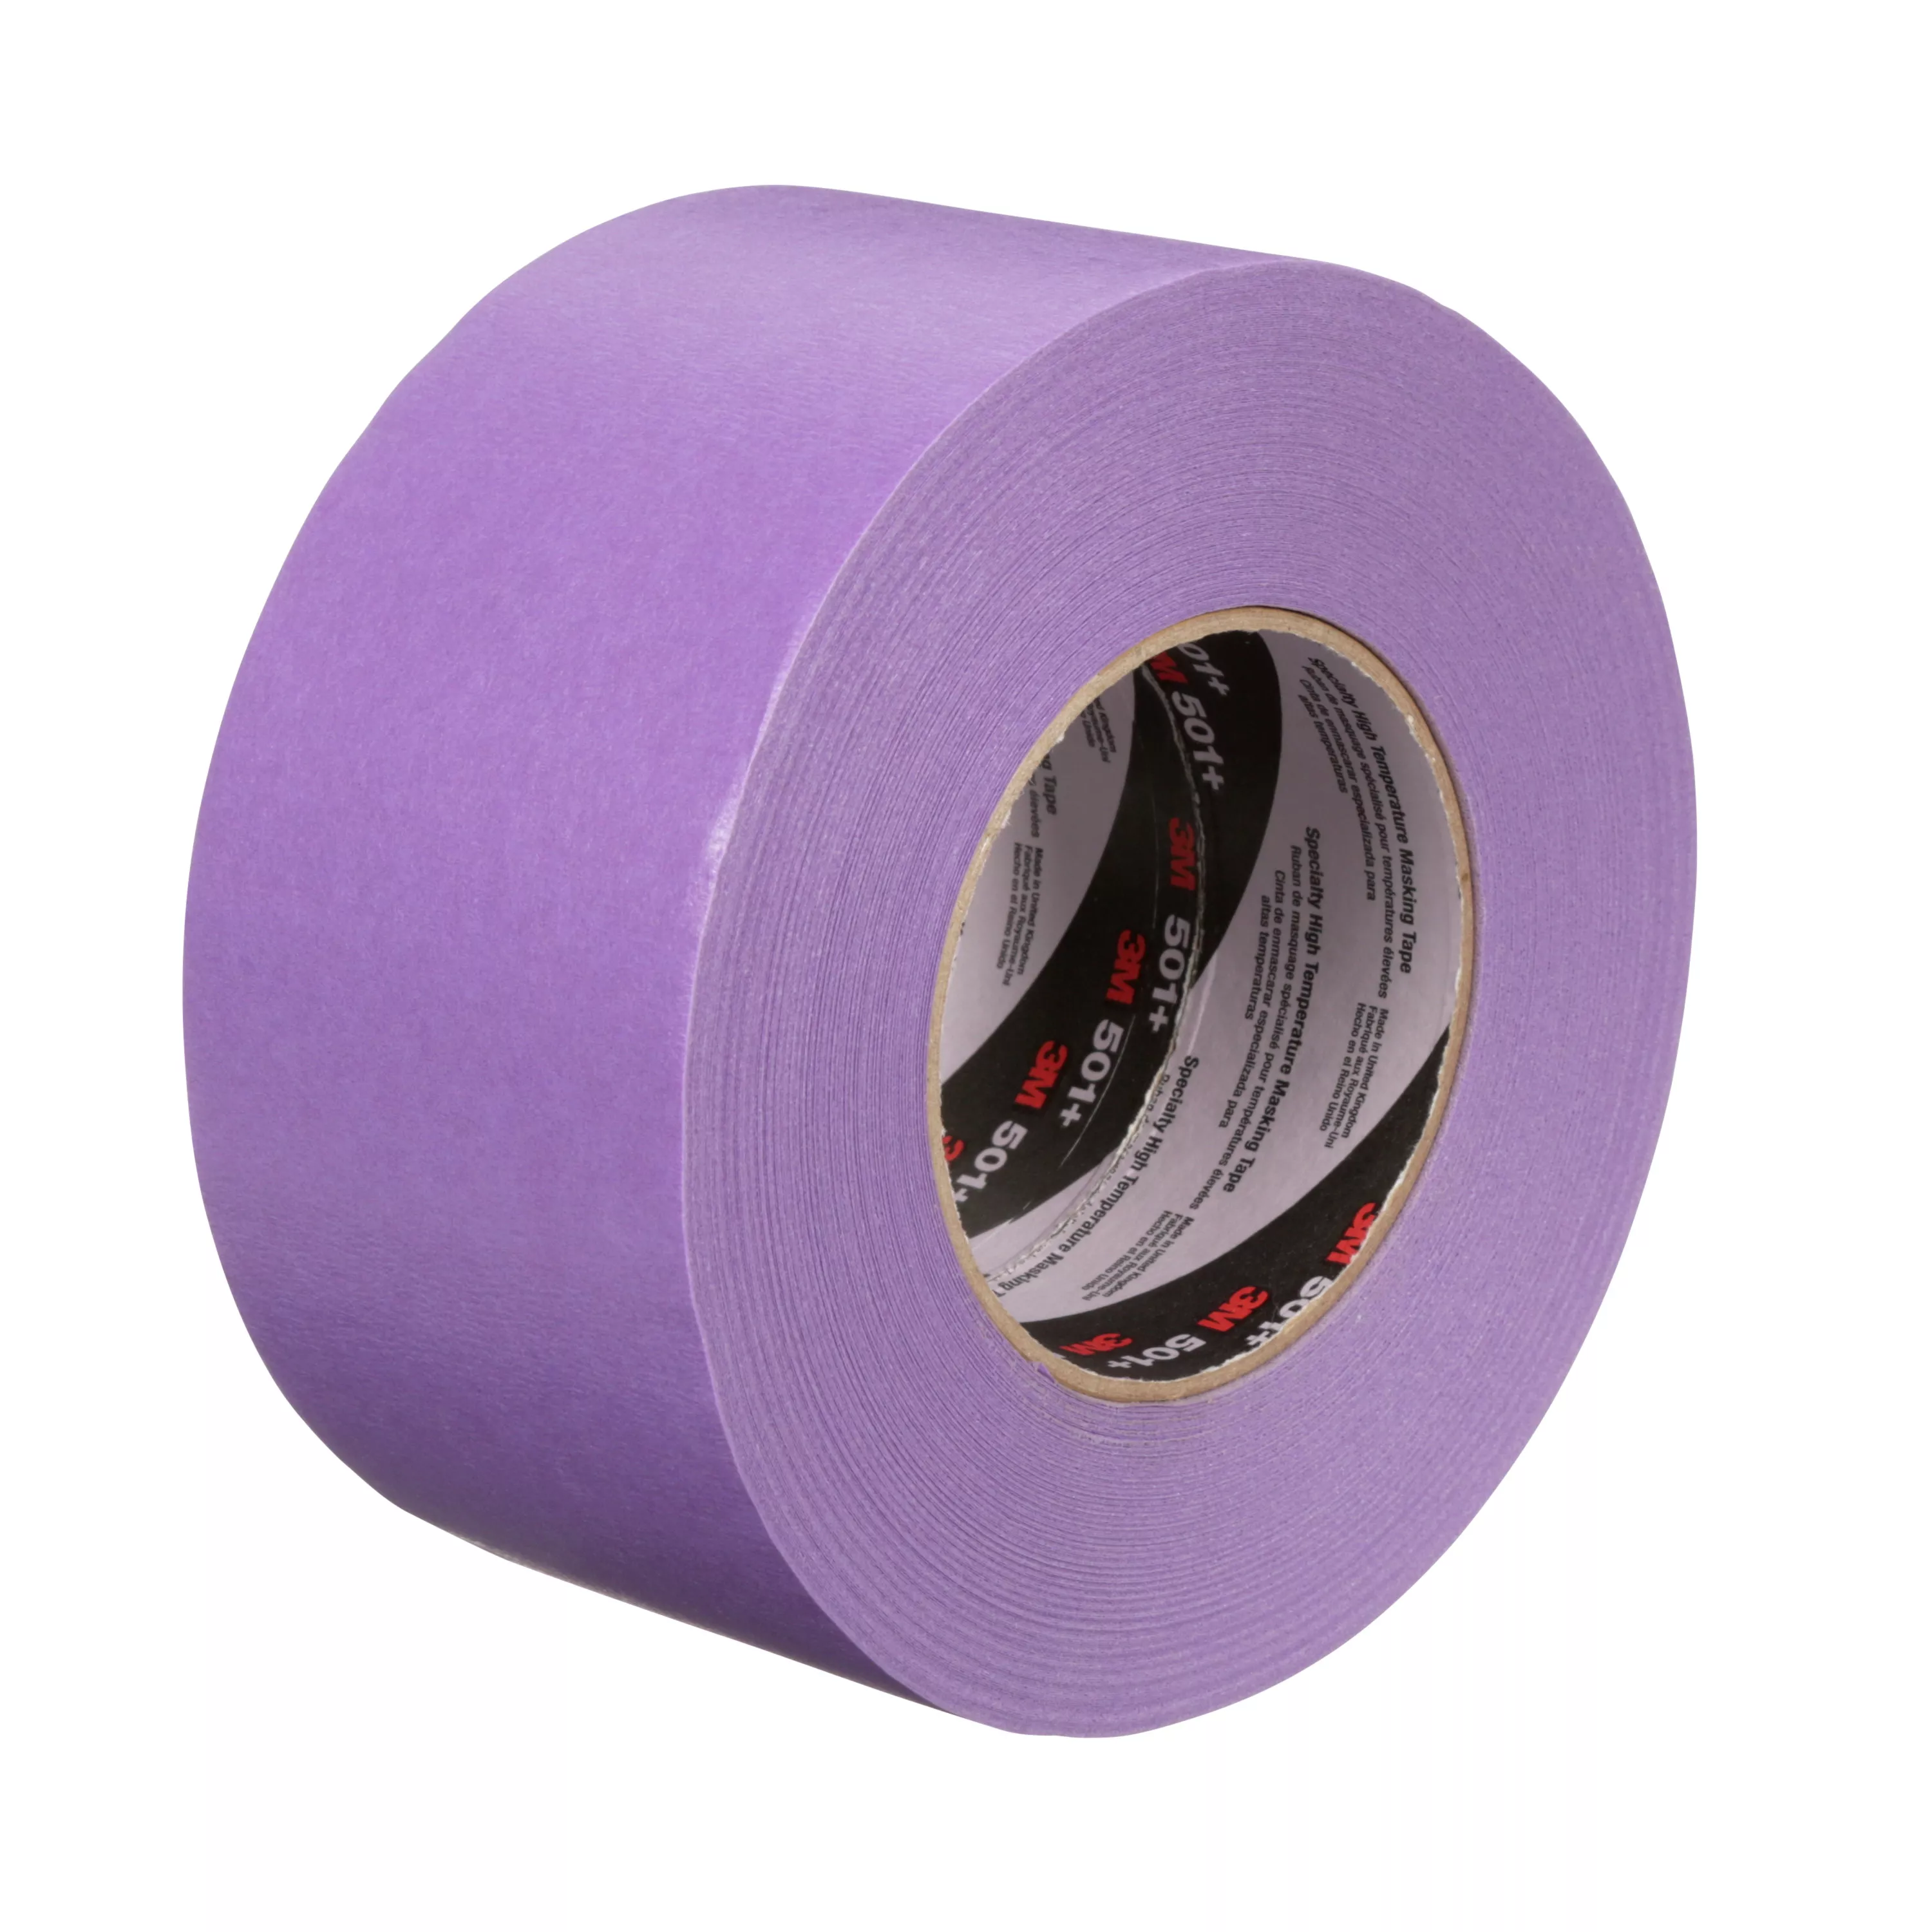 3M™ Specialty High Temperature Masking Tape 501+, Purple, 72 mm x 55
m,
 6.0 mil, 12 Rolls/Case